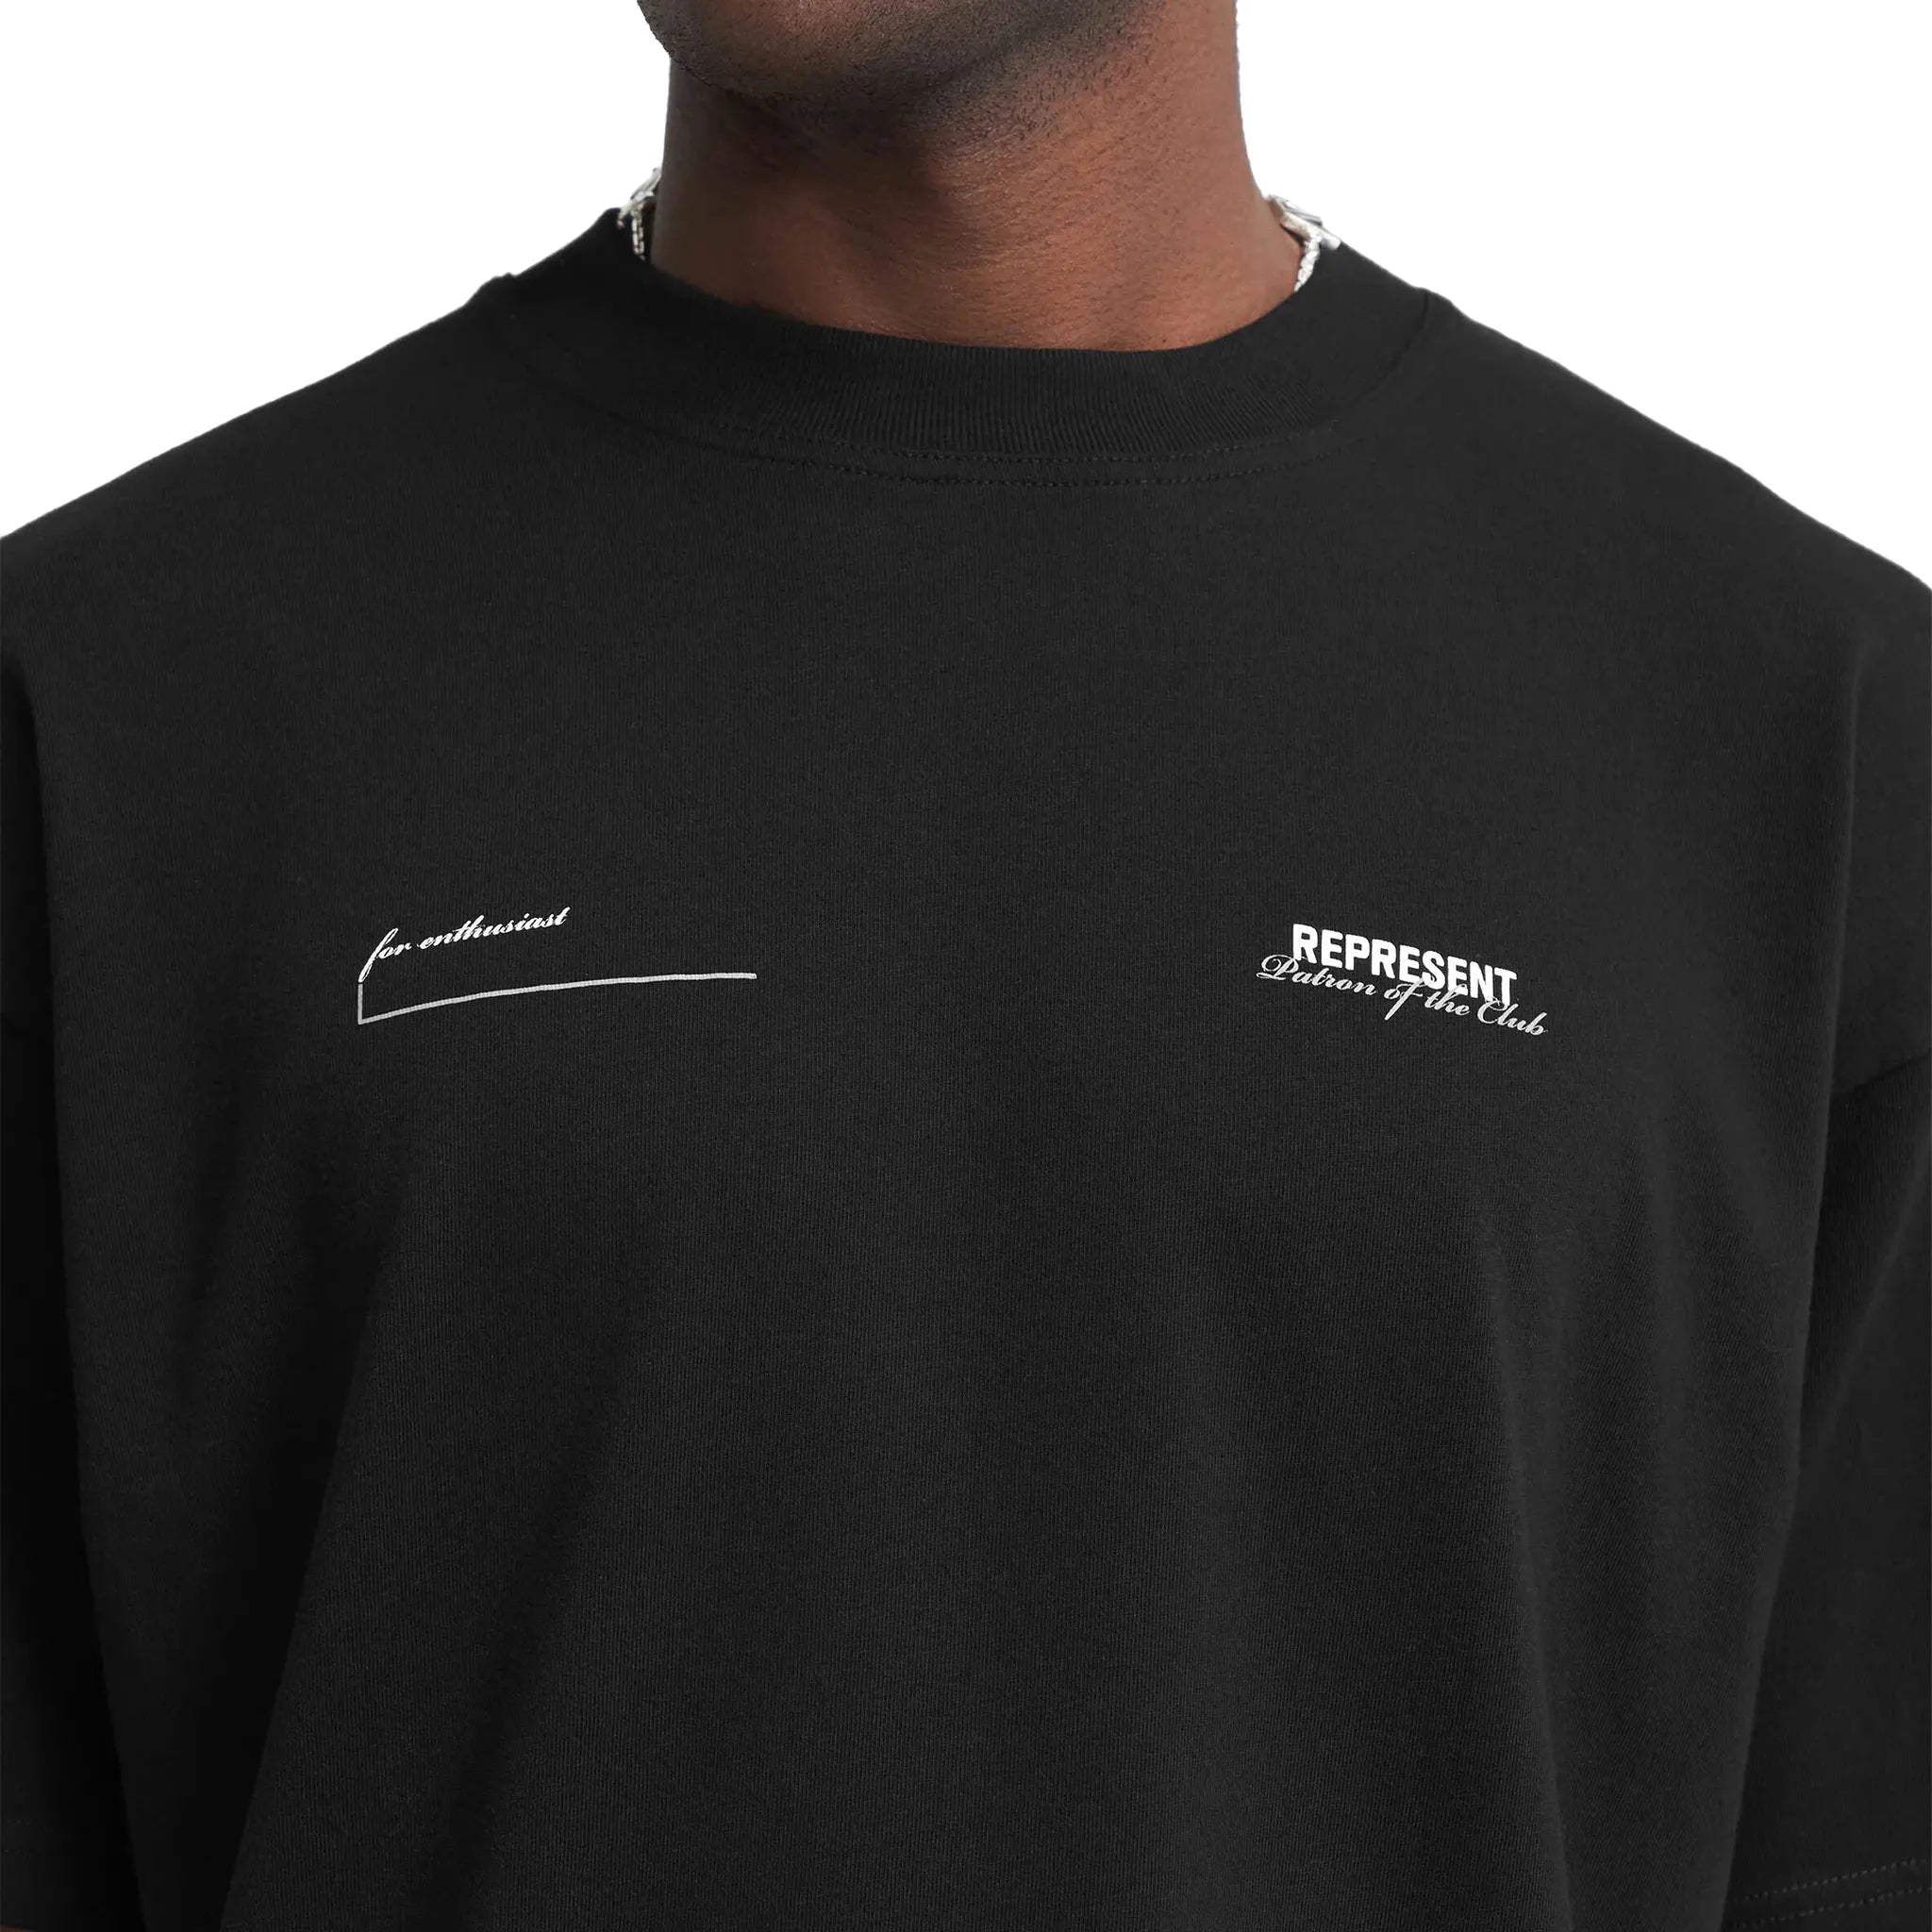 Front Detail view of Represent Patron Club Black T Shirt MLM4274-001